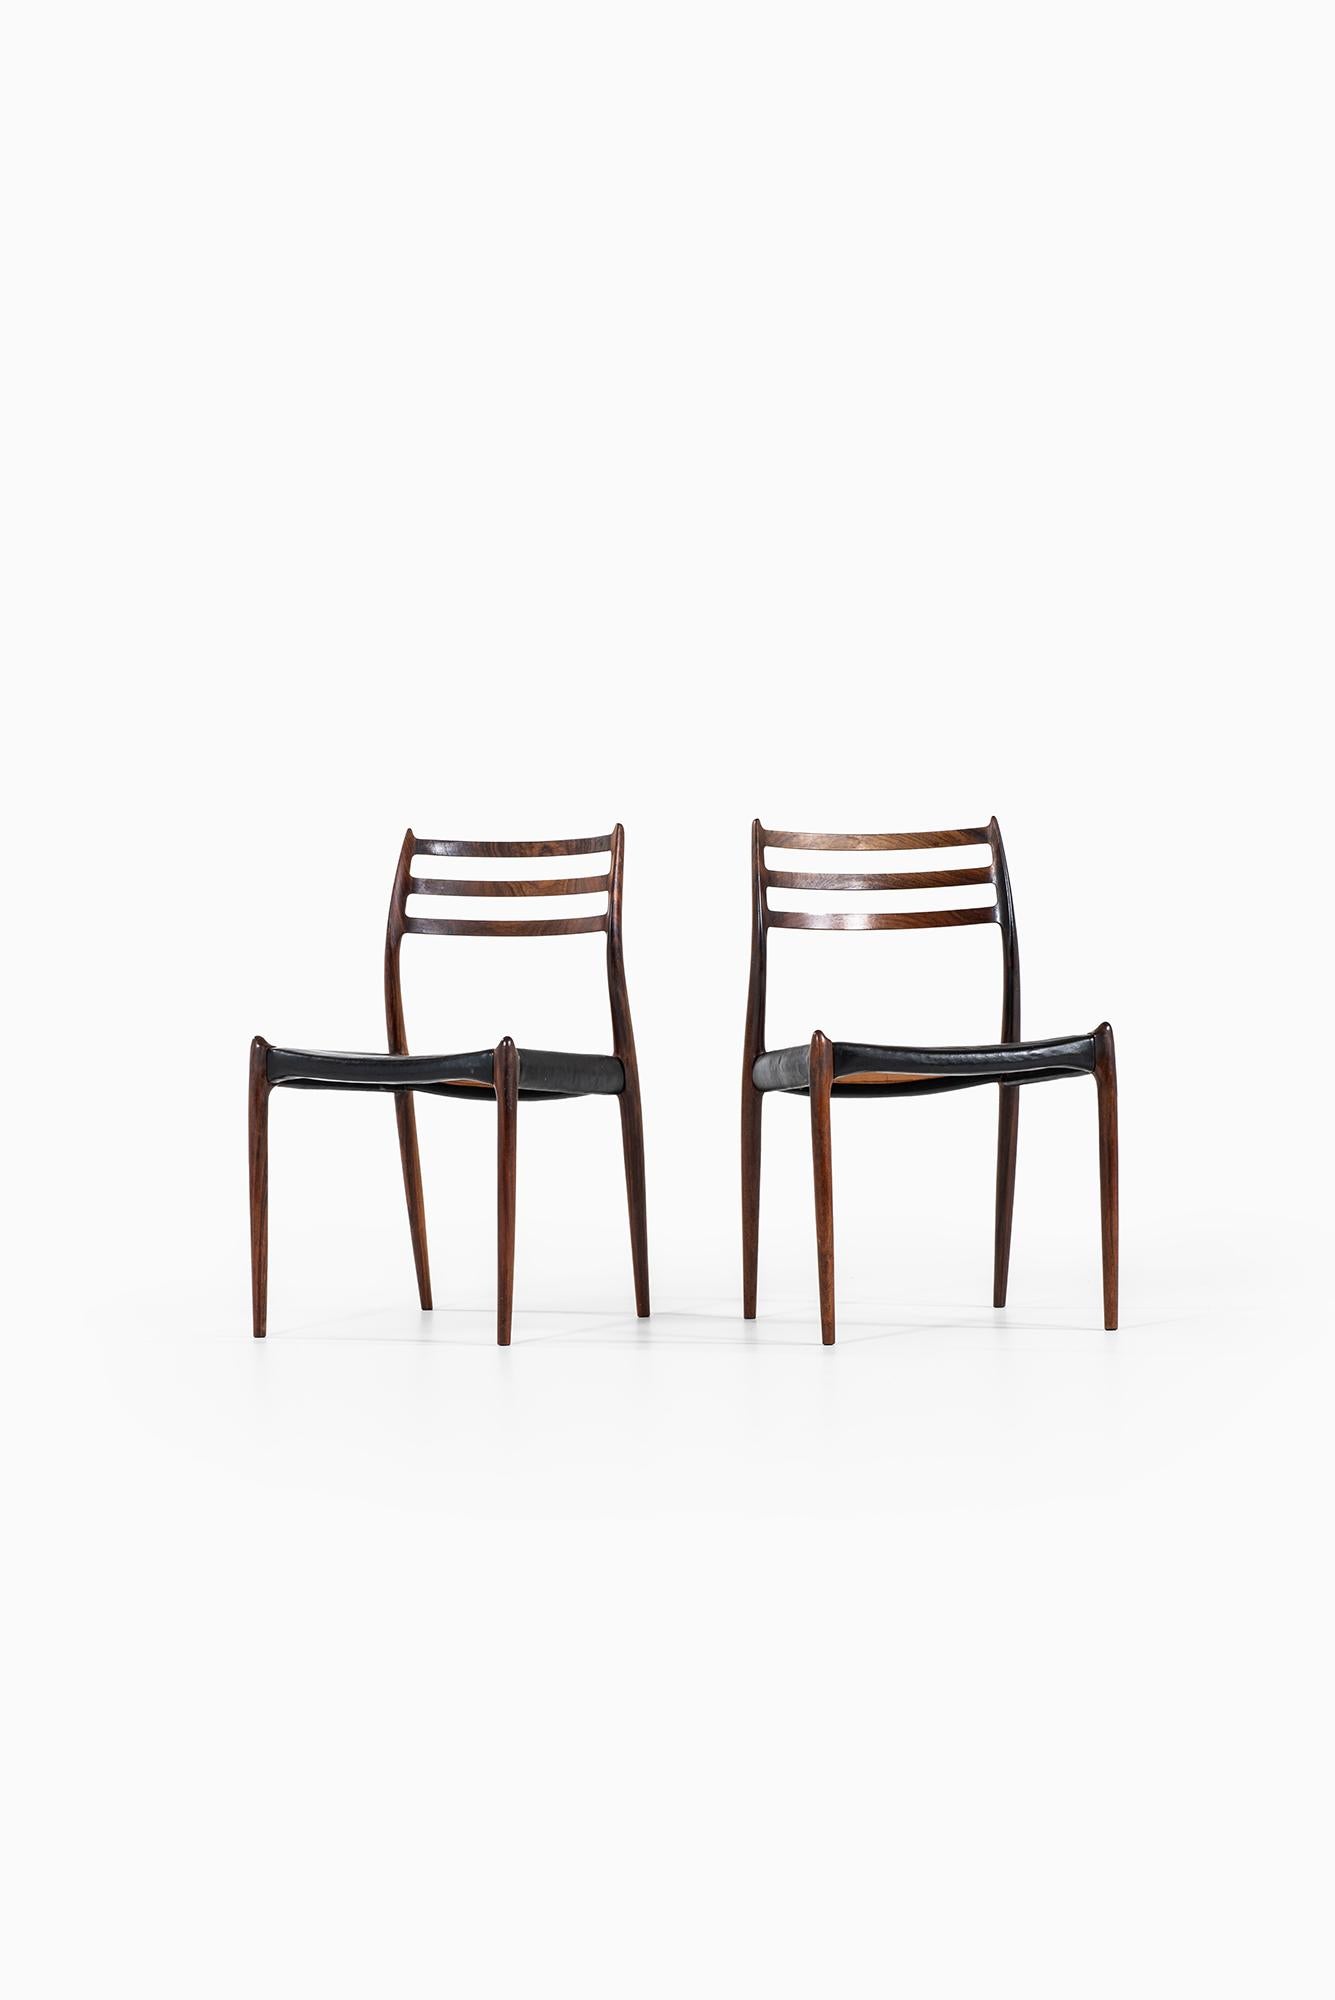 Rare set of 16 dining chairs model 78 designed by Niels O. Møller. Produced by J.L Møllers møbelfabrik in Denmark.